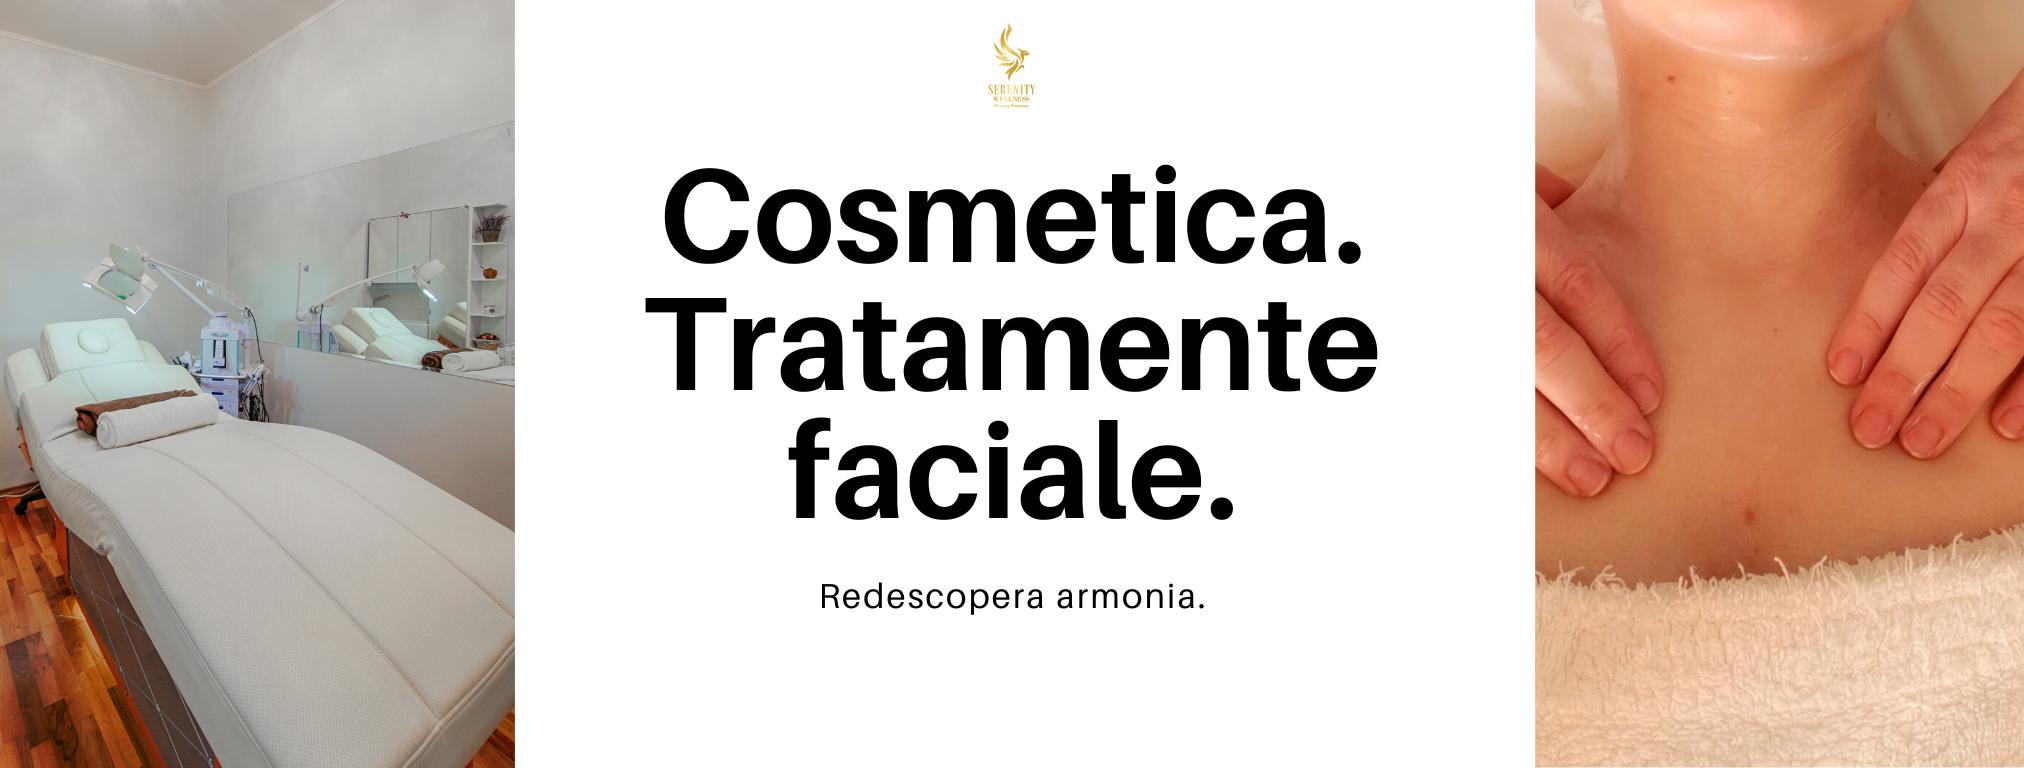 Cosmetica-Tratamente Faciale-Serenity Wellness Mogosoaia